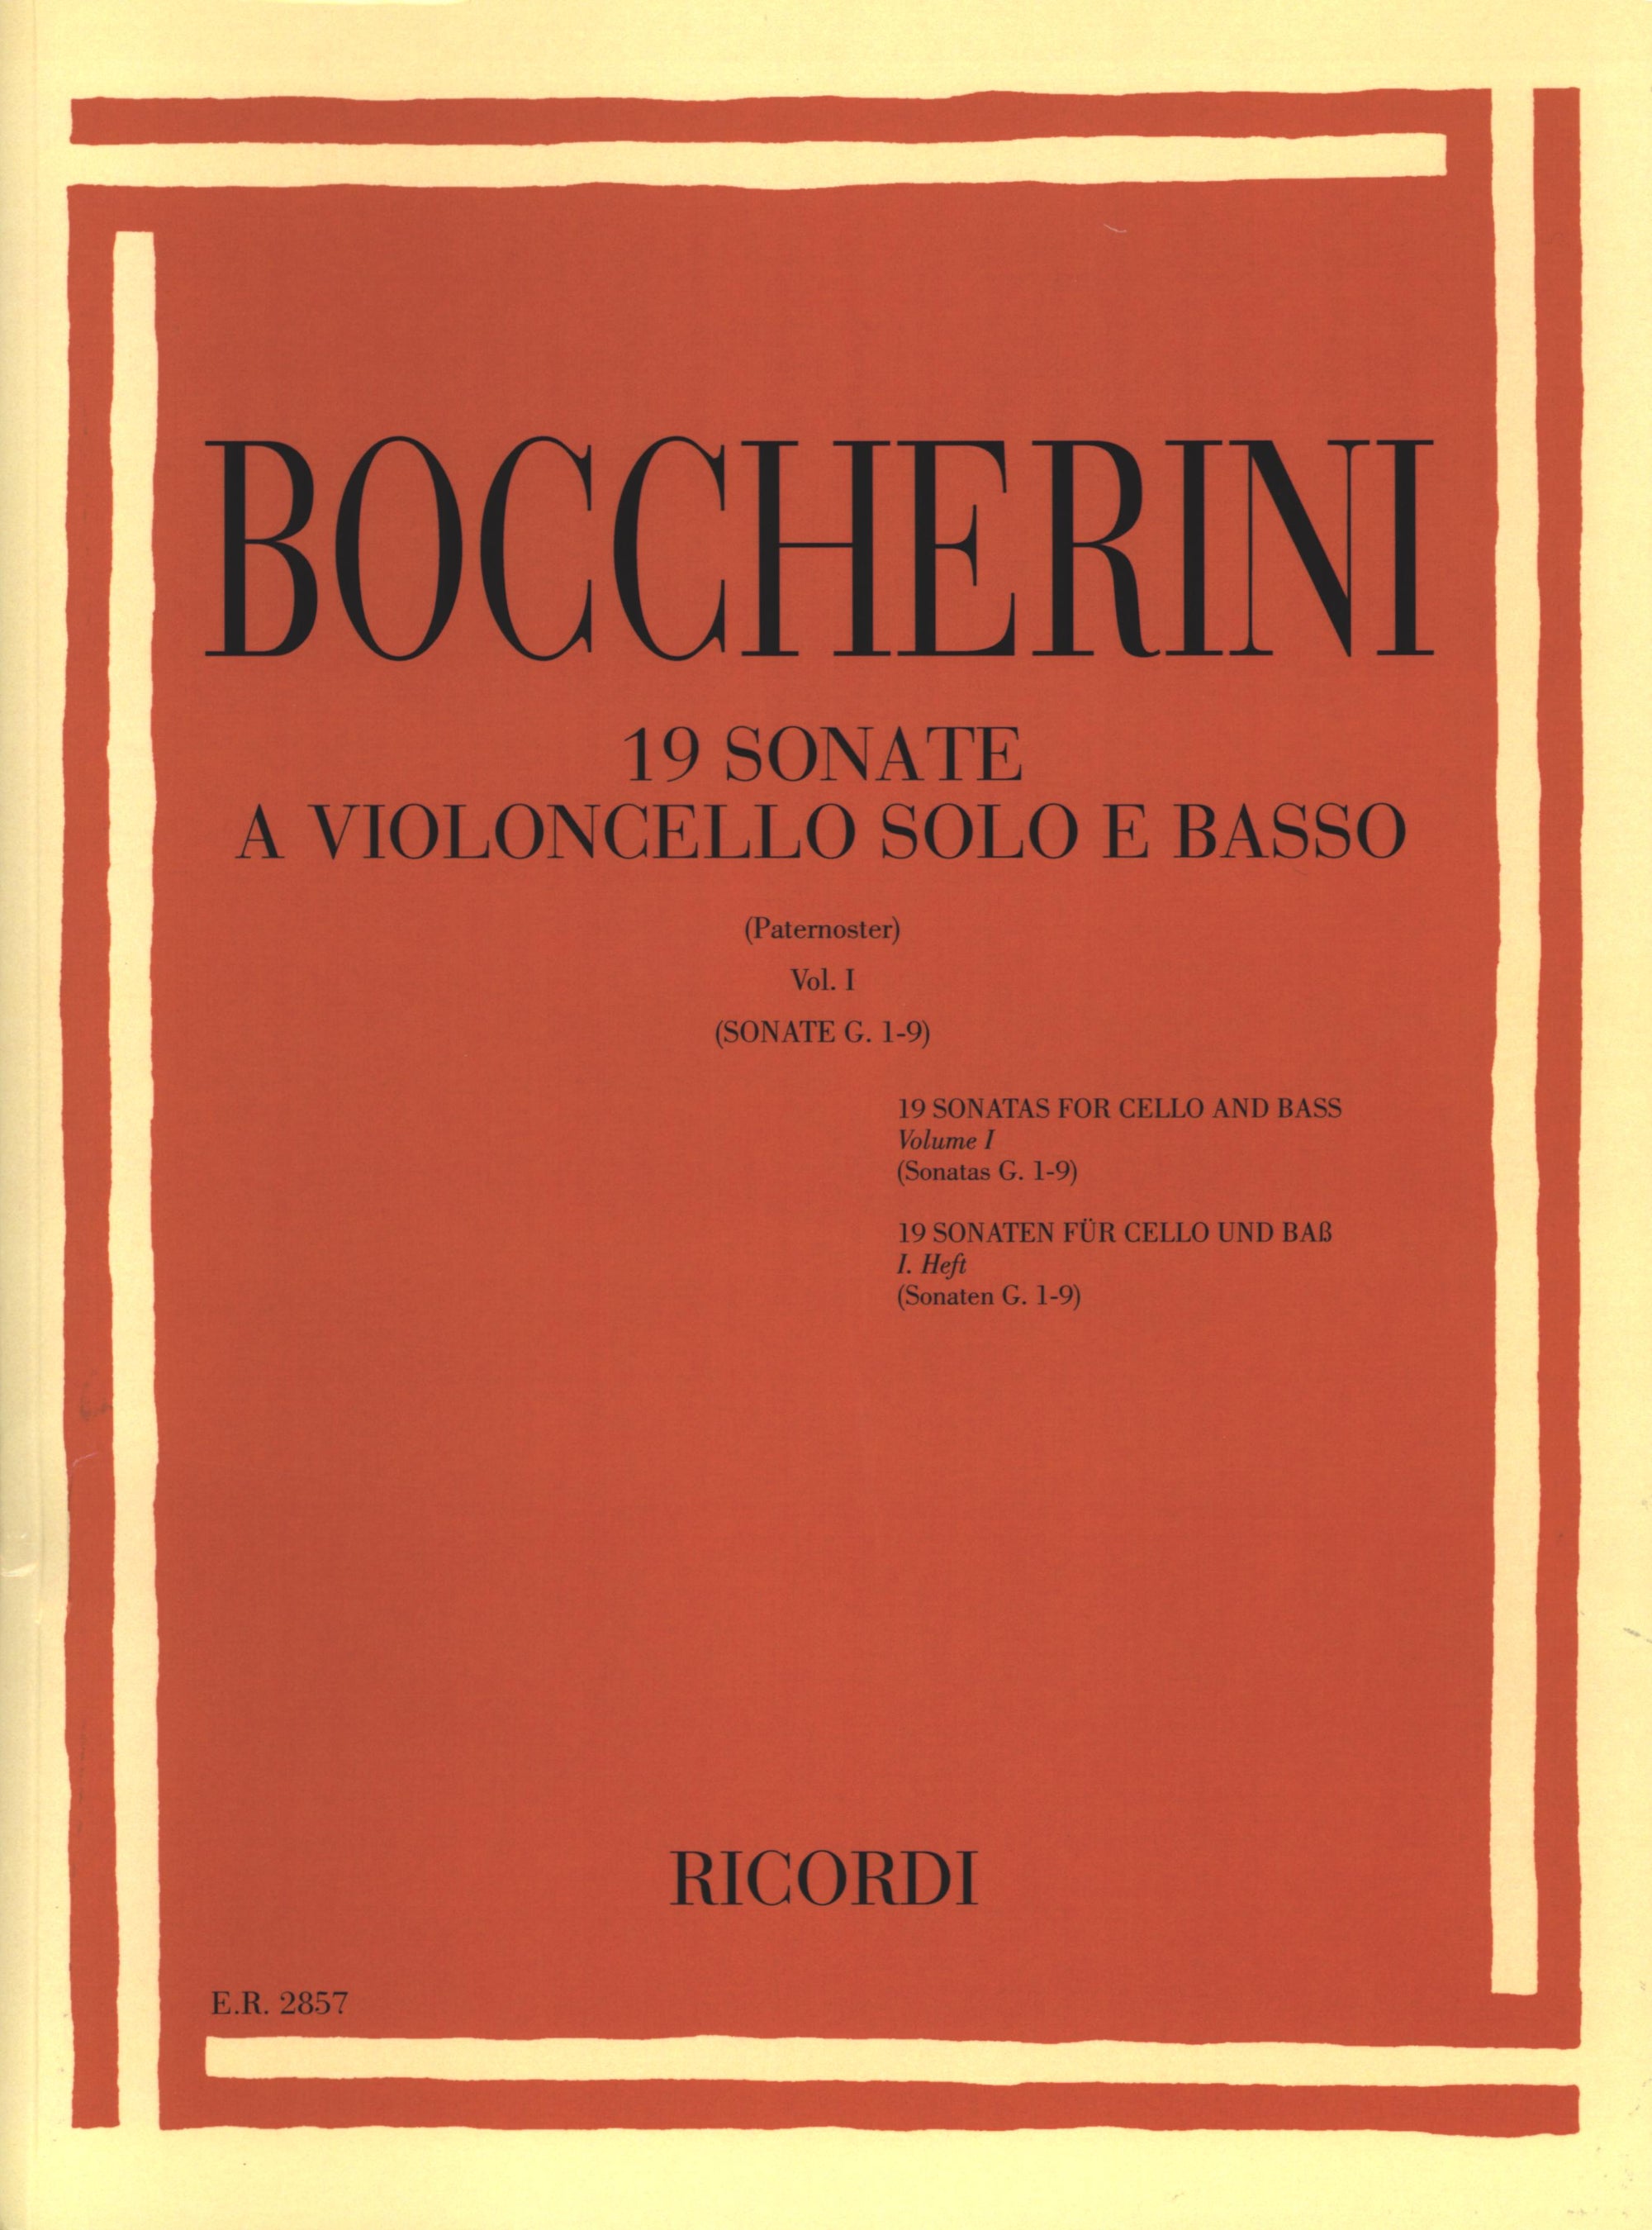 Boccherini: Cello Sonatas - Volume 1 (G. 1-9)